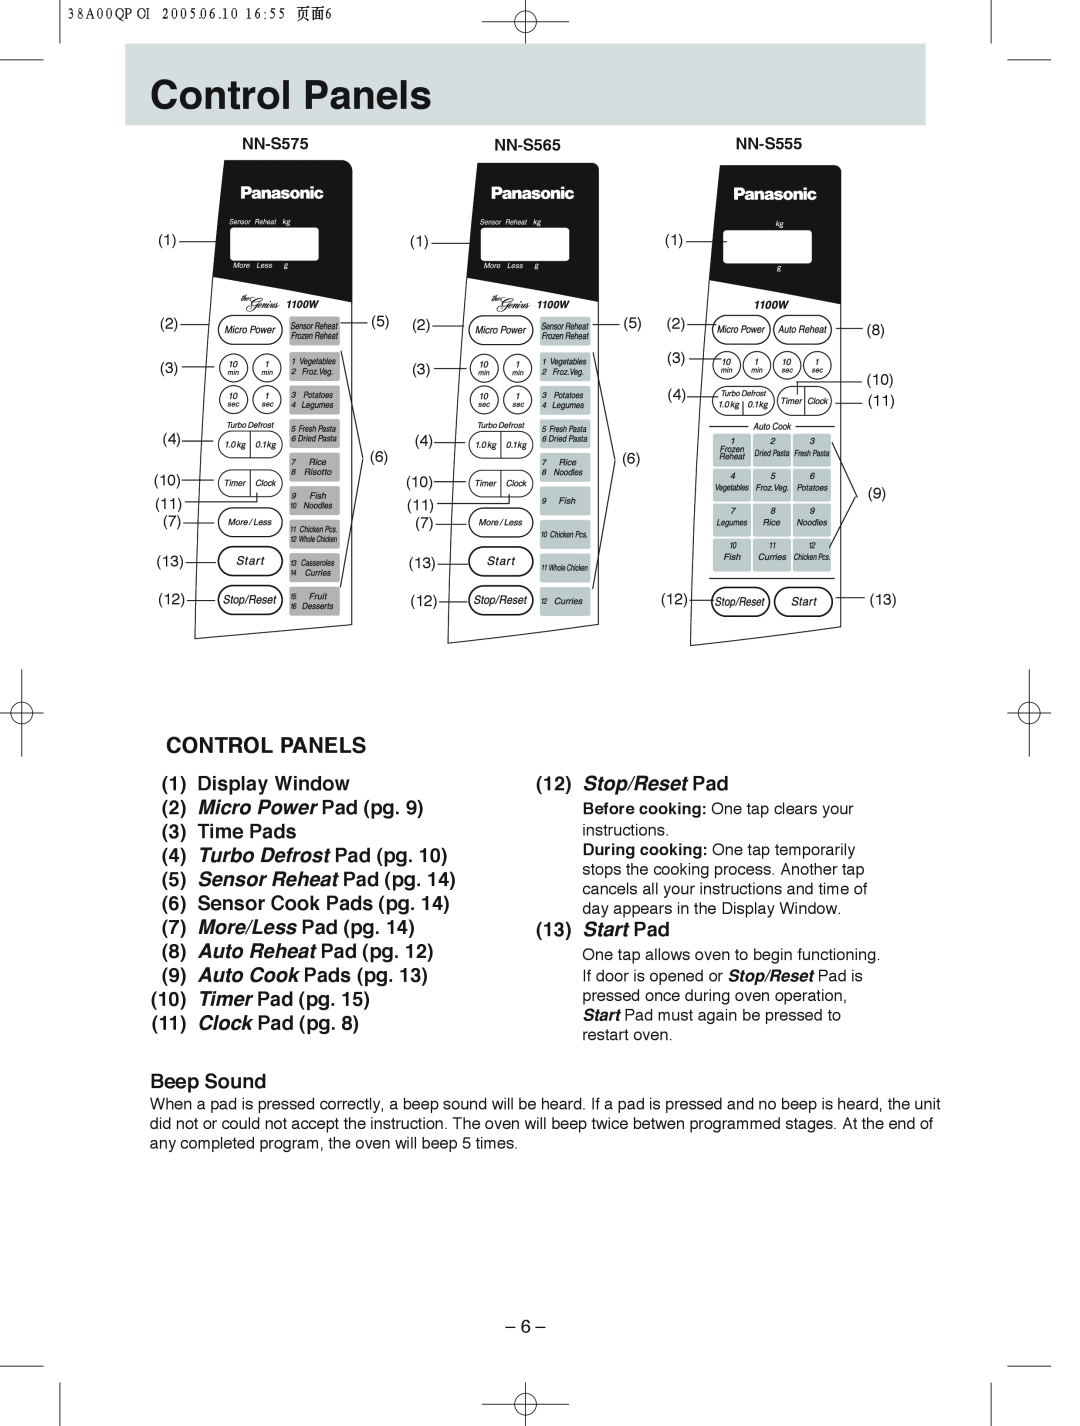 Panasonic NN-S565 Control!!! !!!Panels, Control Panels, 1Display Window, 3Time Pads, 9Auto Cook Pads pg. 10Timer Pad pg 